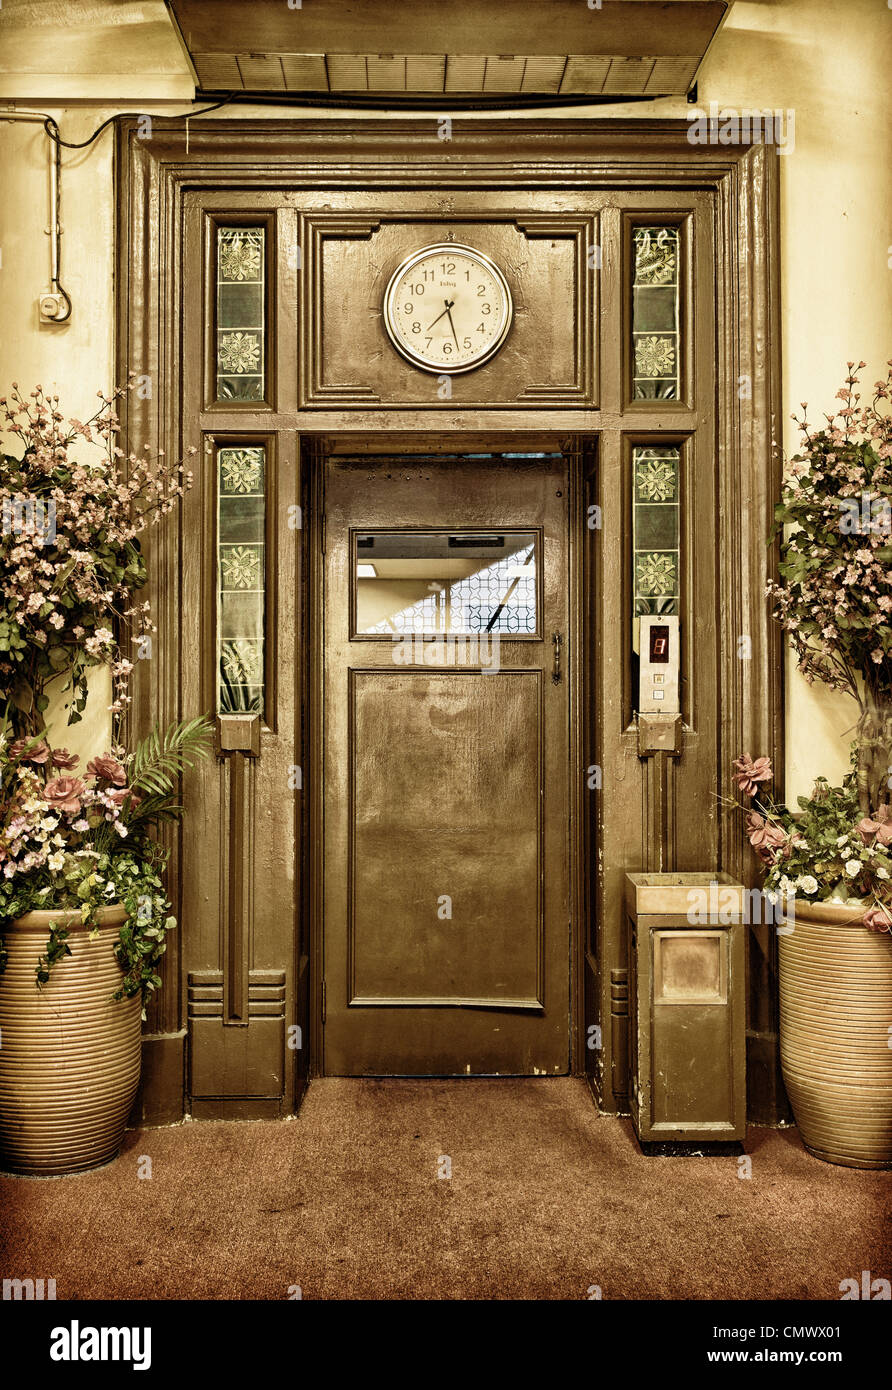 Old Vintage Elevator Door In The Lobby Stock Photo 47283041